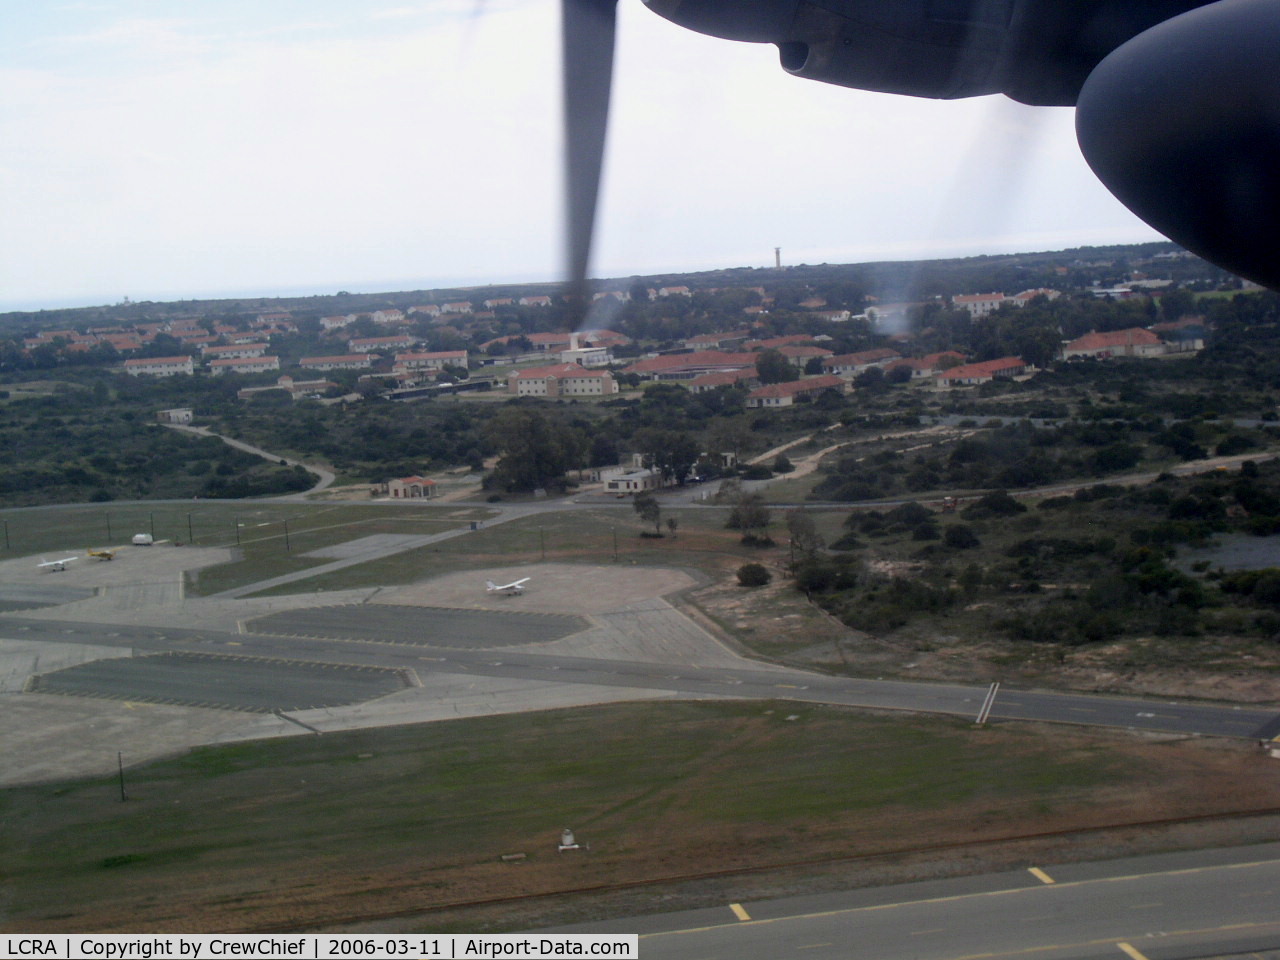 RAF Akrotiri Airport, Akrotiri Cyprus (LCRA) - Taxiways from air